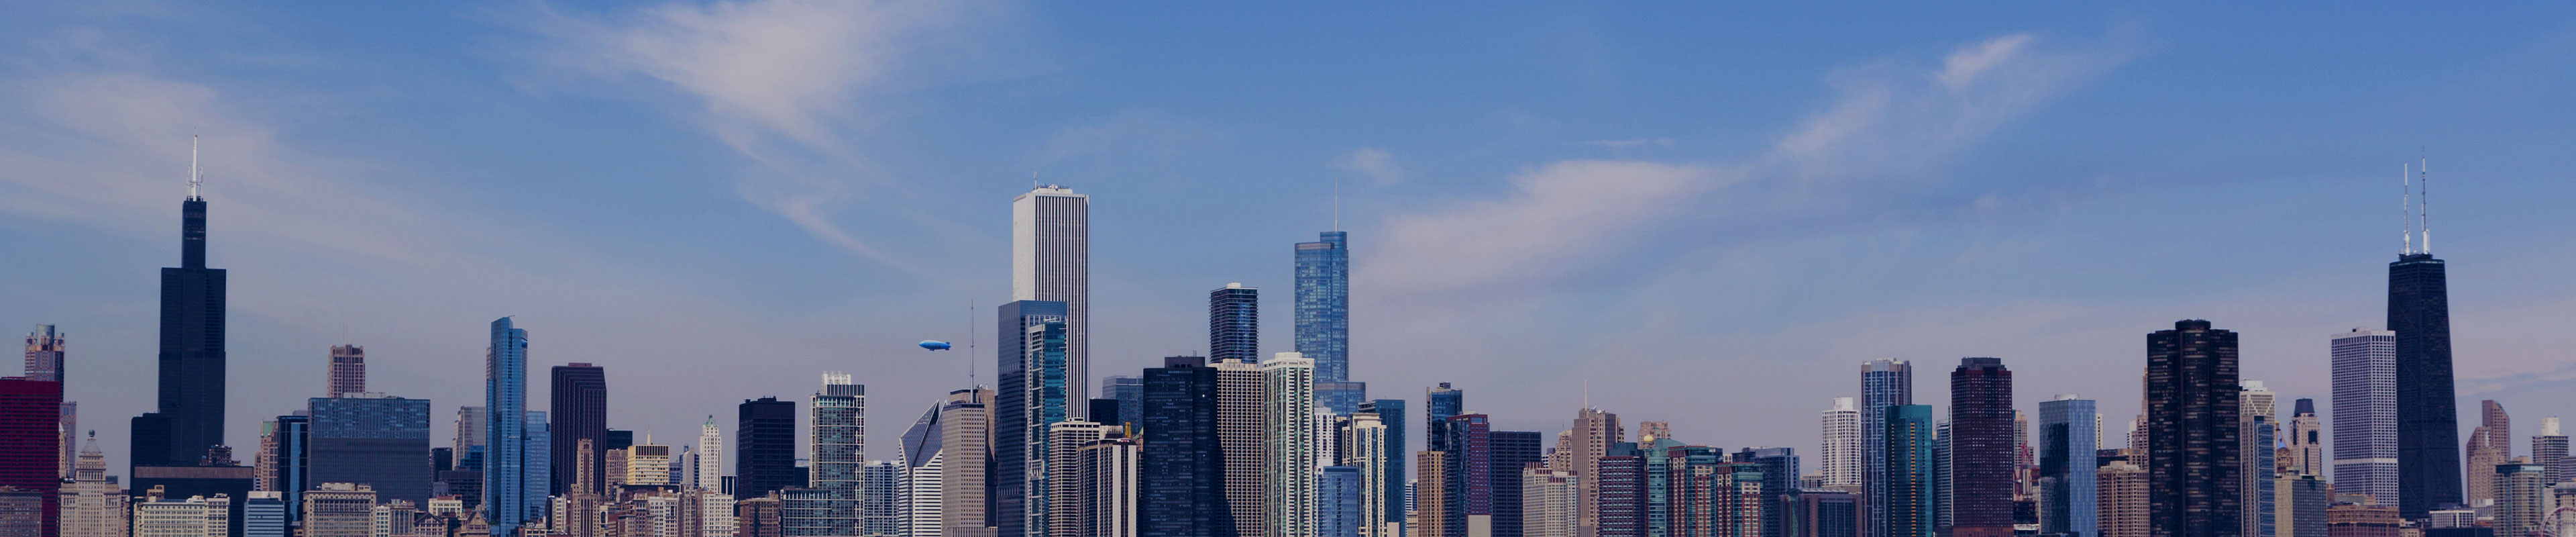 Best Digital Strategy Agencies in Chicago